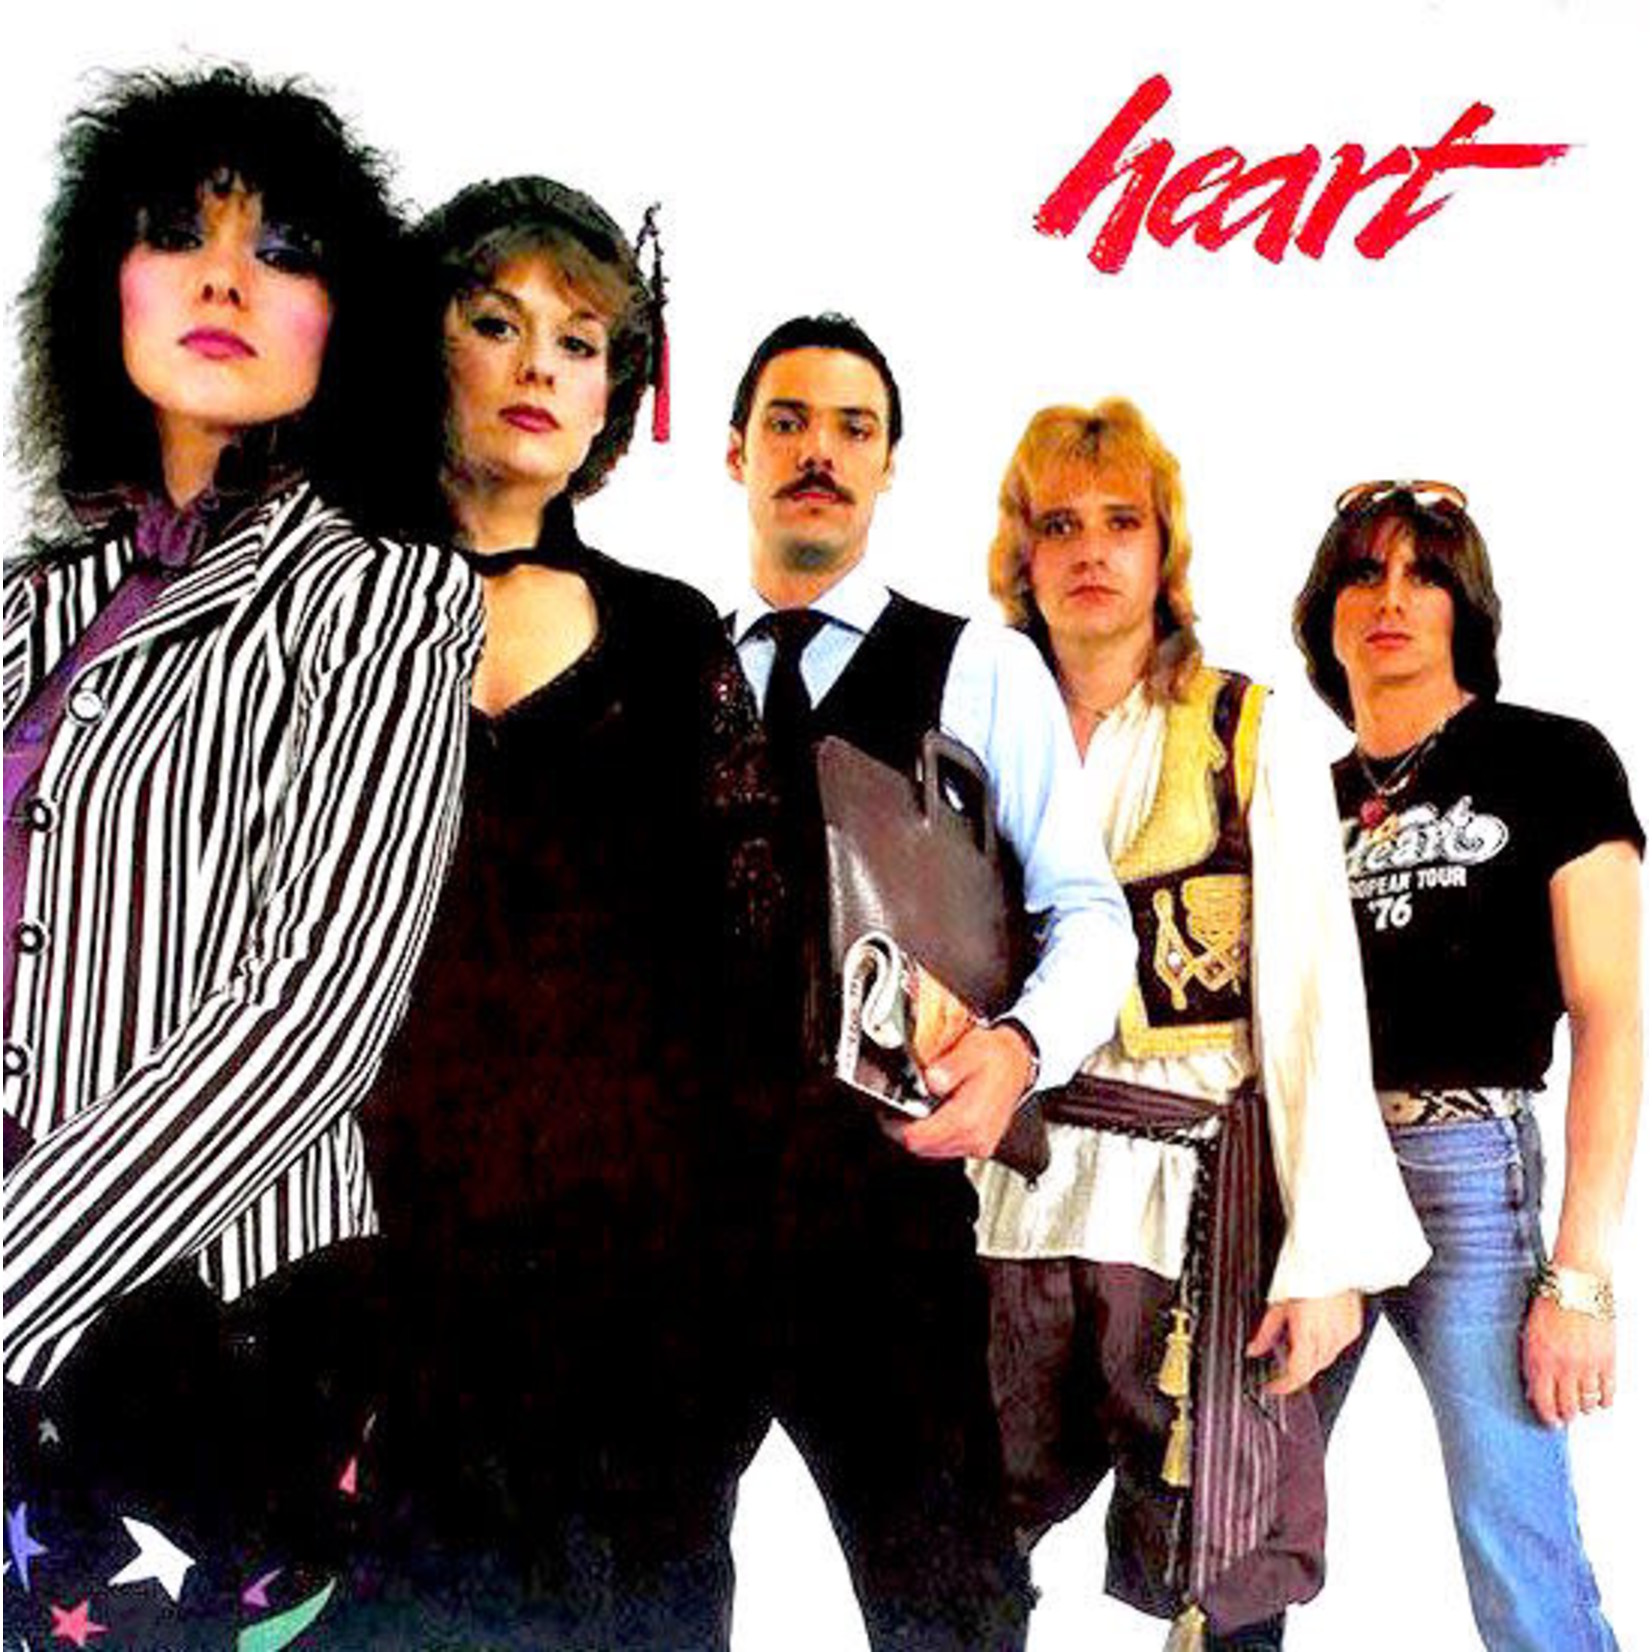 [Vintage] Heart - Greatest Hits Live (2LP)